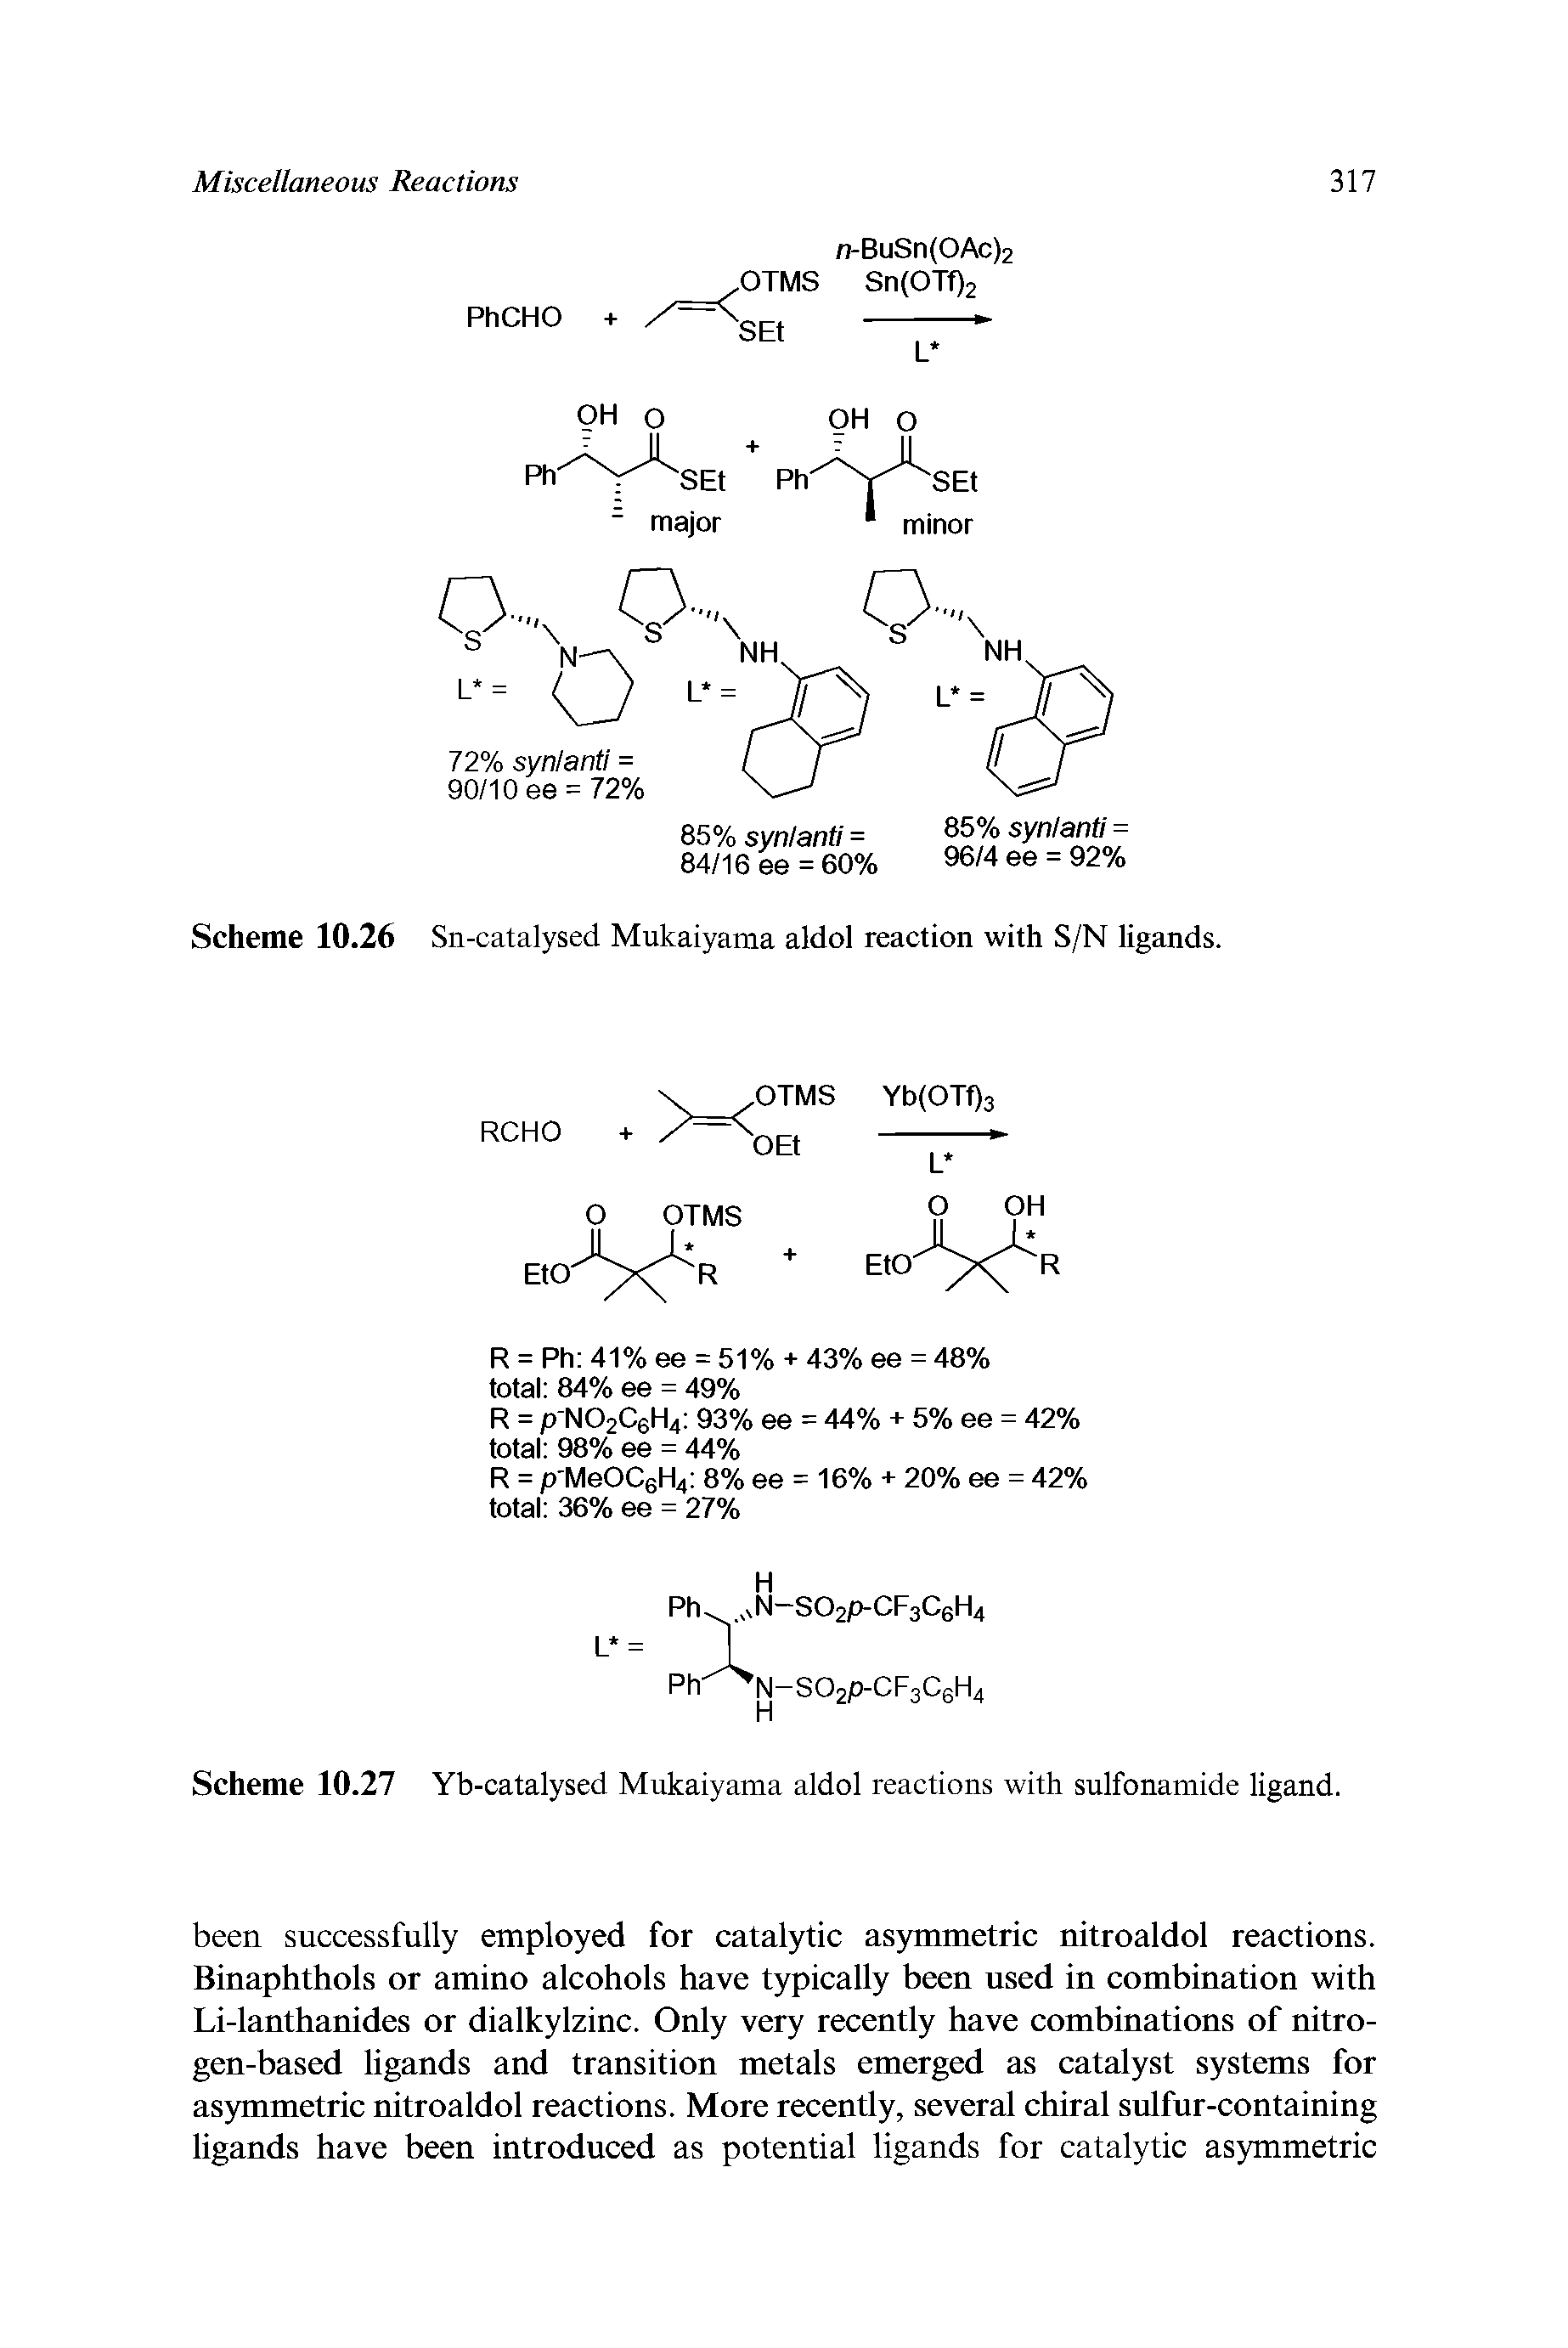 Scheme 10.26 Sn-catalysed Mukaiyama aldol reaction with S/N ligands.